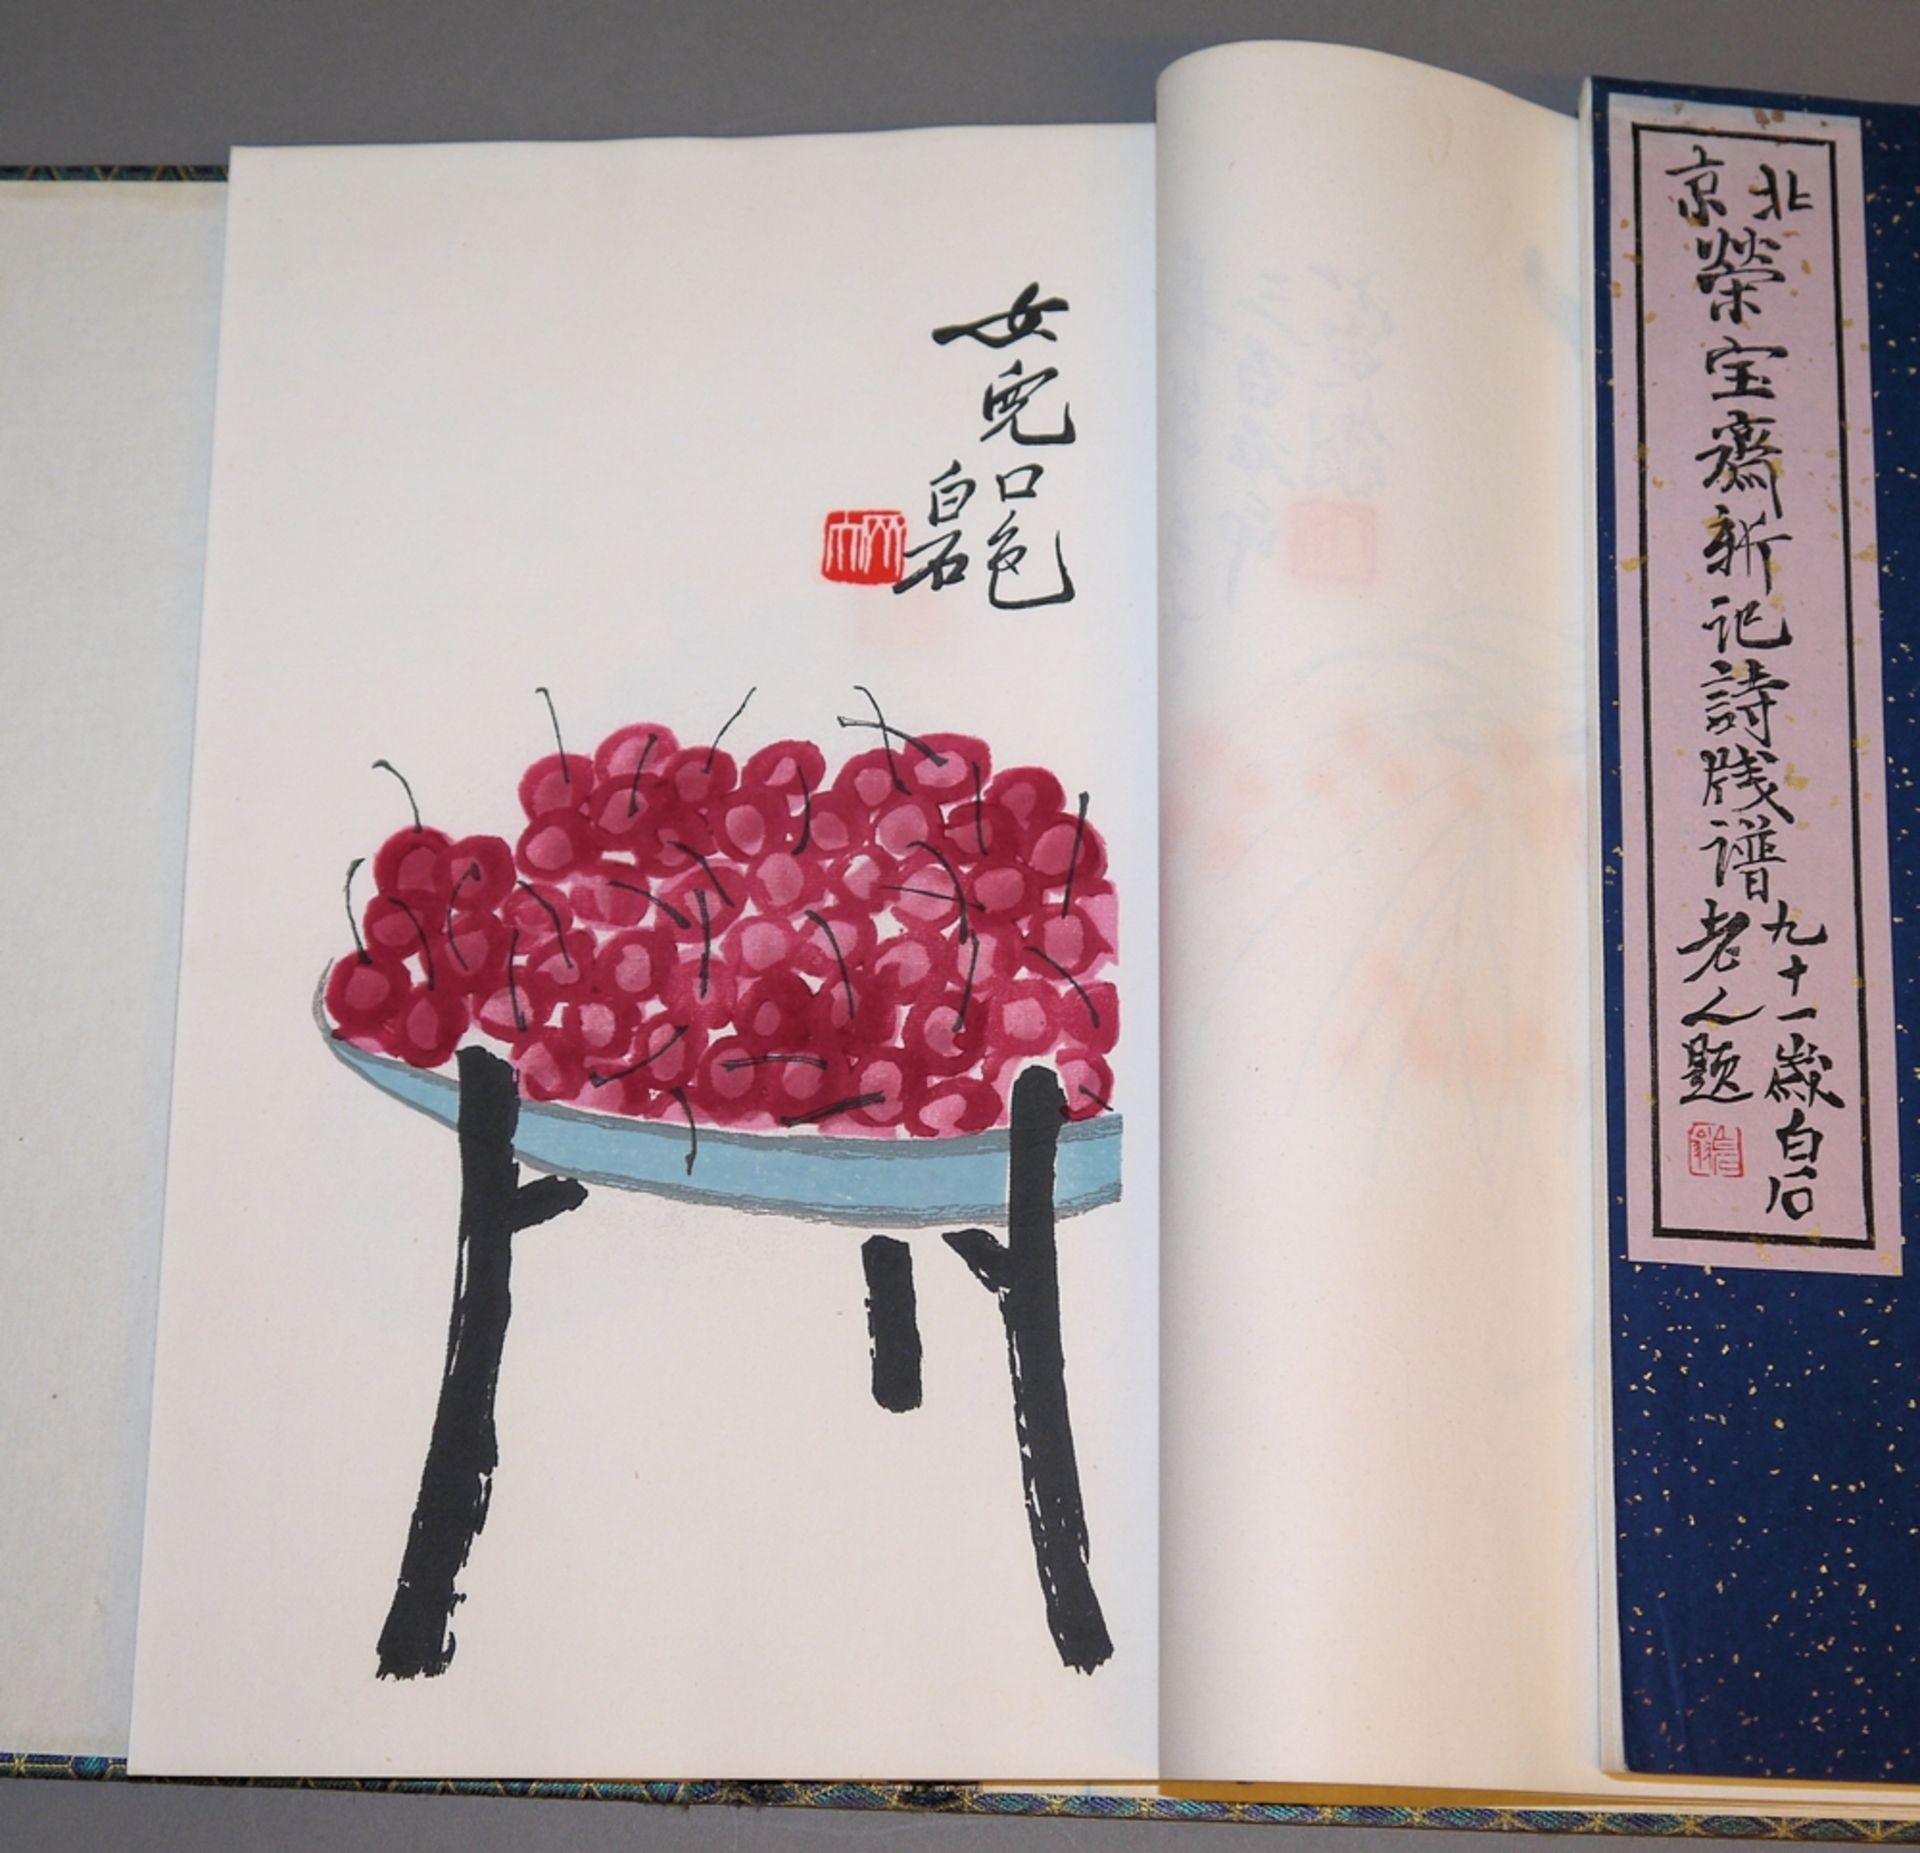 Shi Jianpu, die "Briefpapier-Sammlung", Verlag Rong Bao Zhai, Peking 1955 - Image 4 of 5